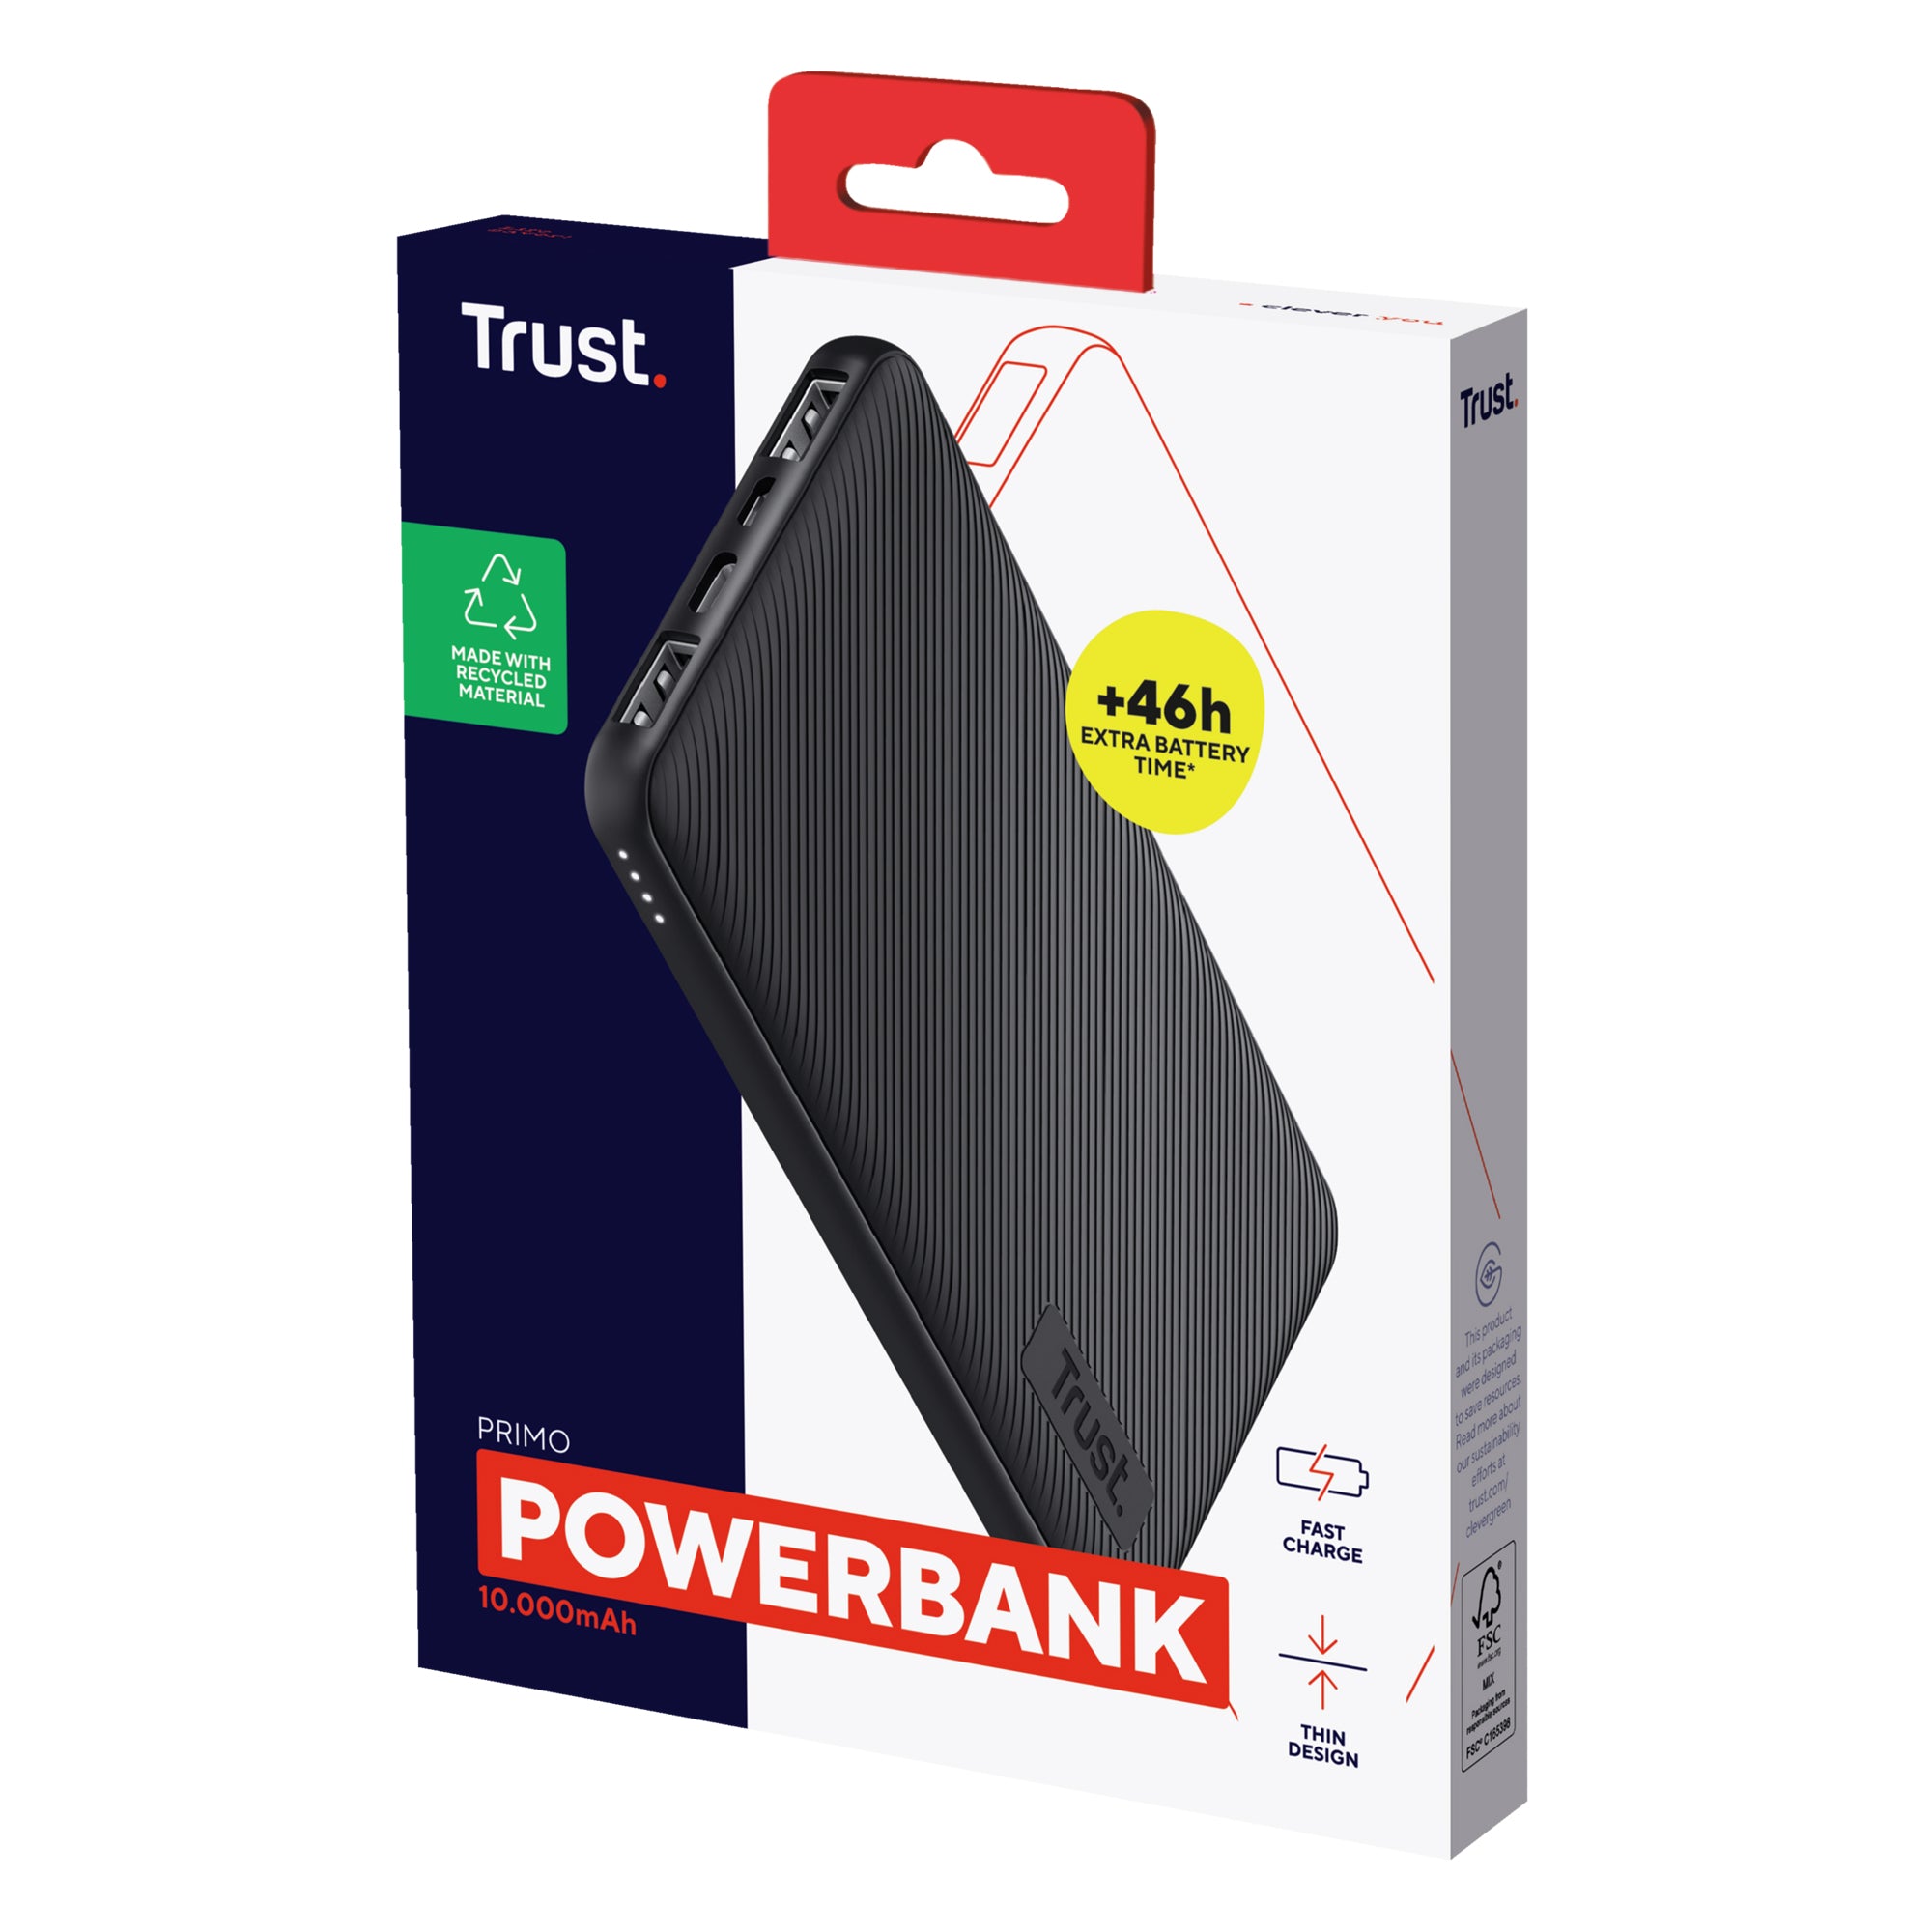 trust-powerbank-ultrasottile-10-000-mah-primo